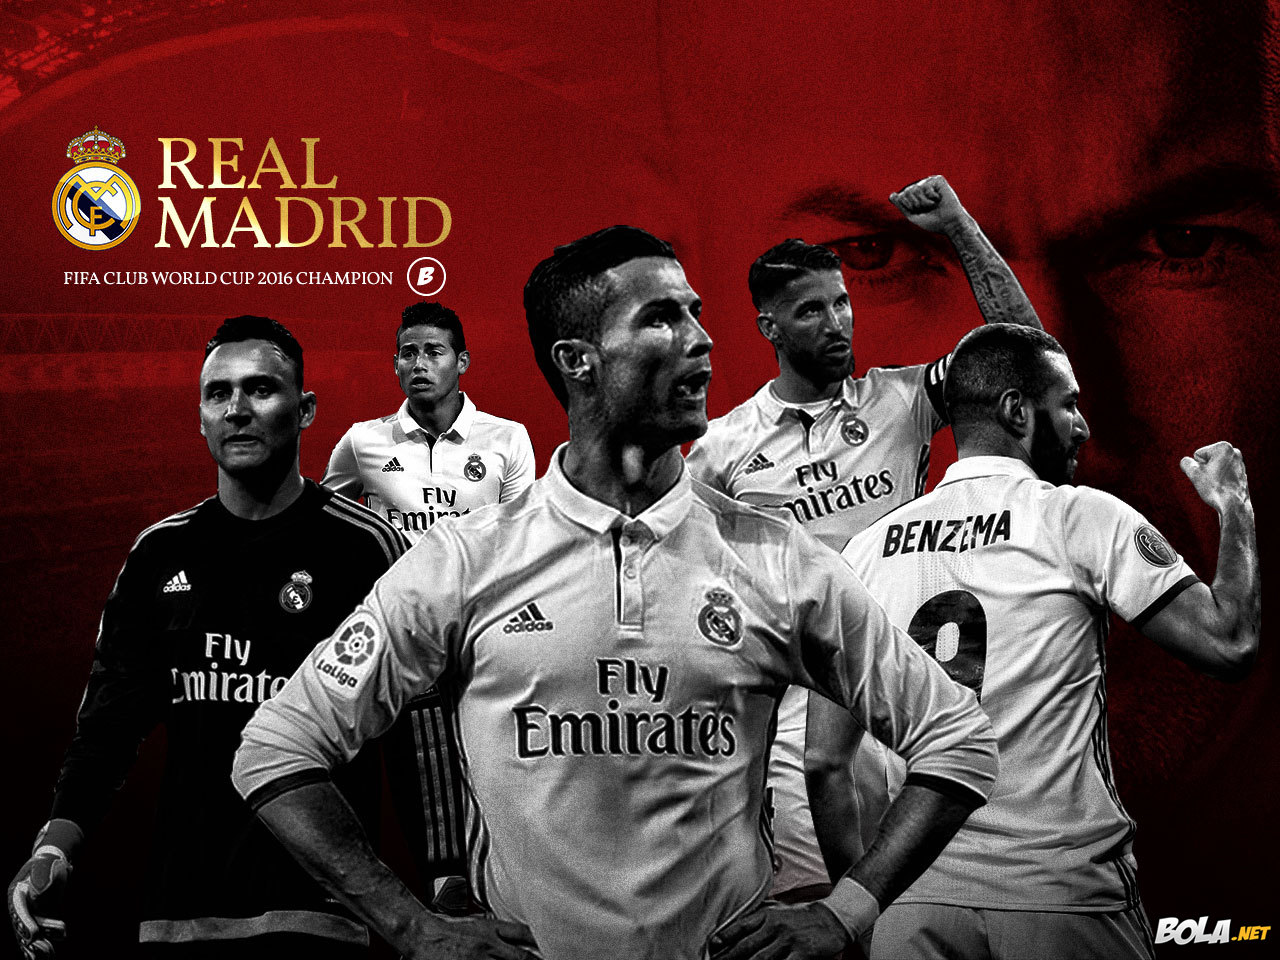 Deskripsi : Wallpaper Real Madrid Juara Pd Antar Klub, size: 1280x960